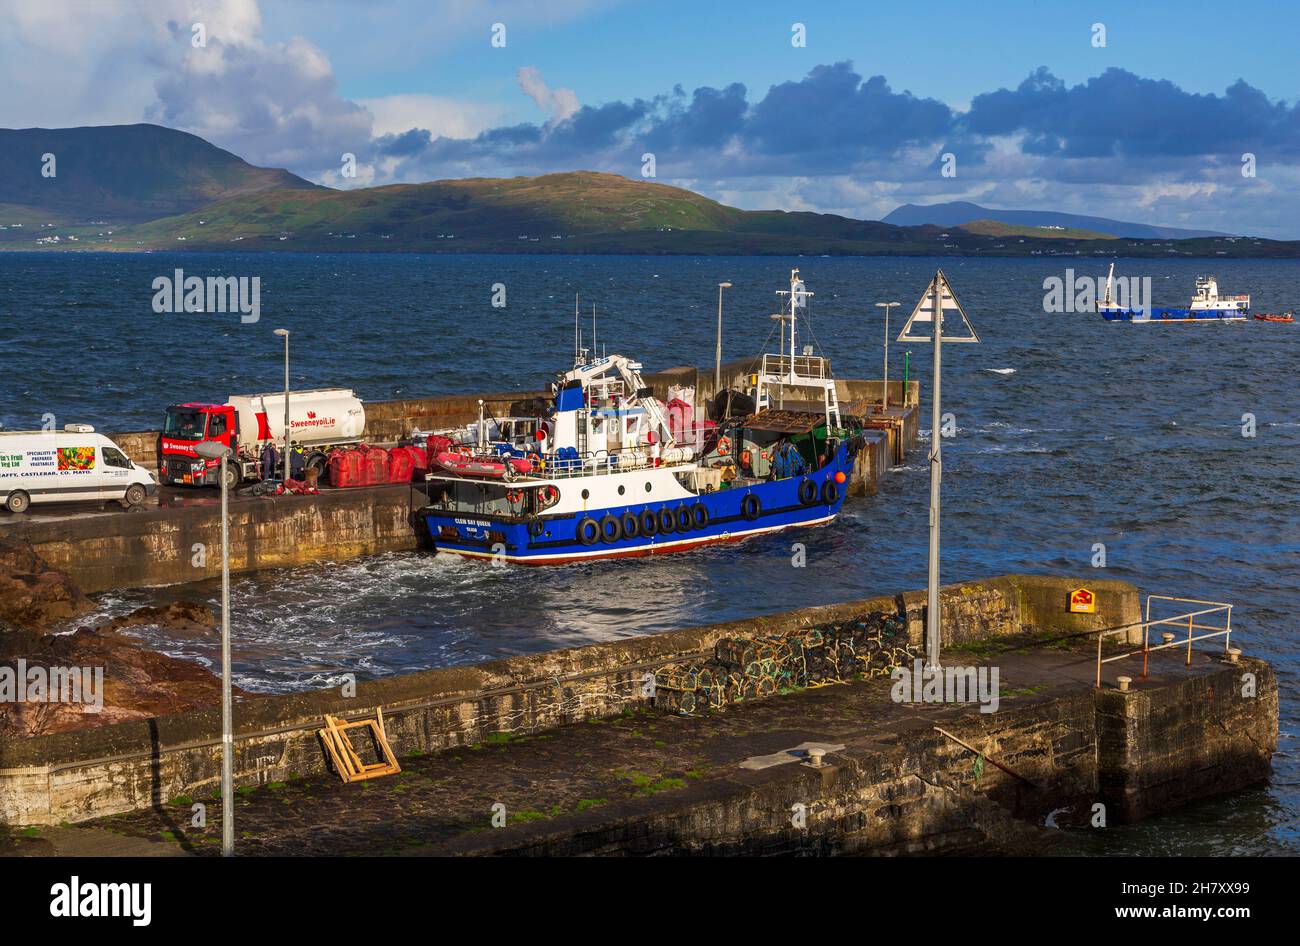 Roonagh Pier, Louisburgh, County Mayo, Ireland Stock Photo